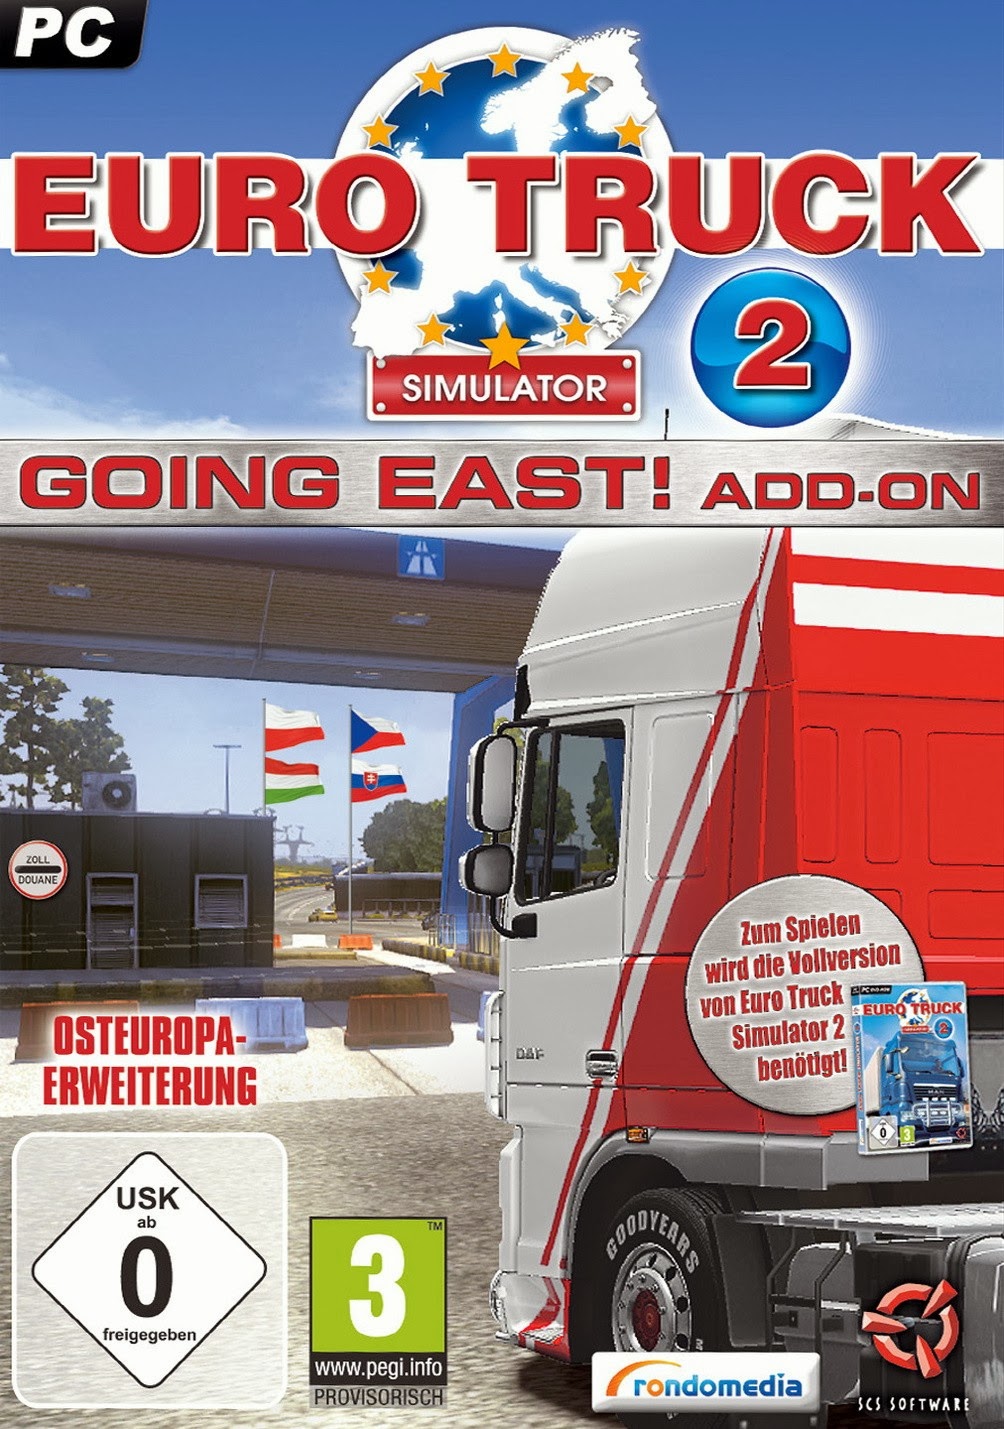 Euro Truck Simulator 2 Free Download Full Version Pc Crack